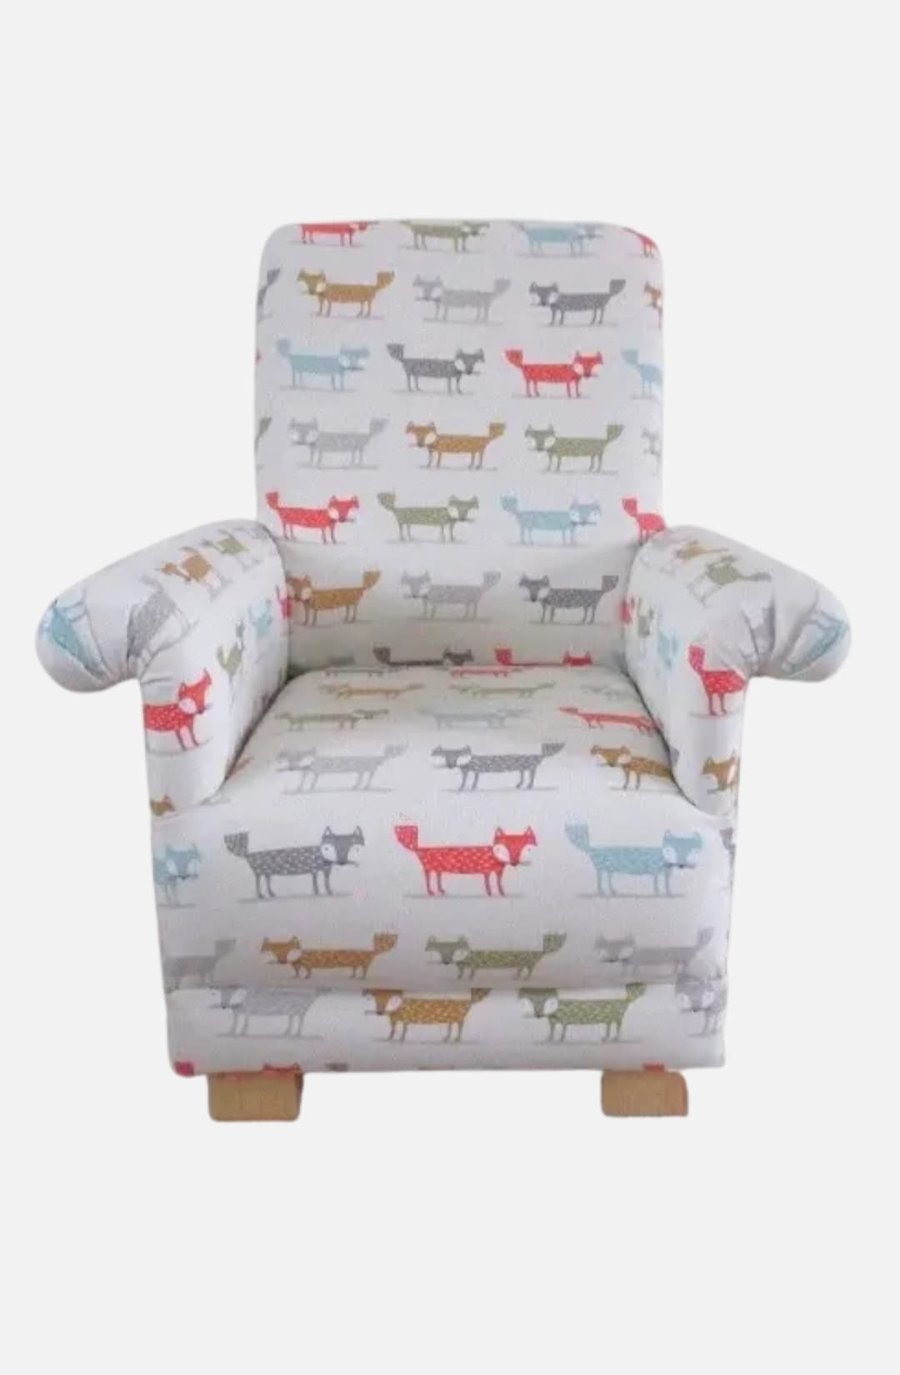 Child's Chair Mr Foxy Fox Fabric Armchair Kid's Nursery Bedroom Animals Baby